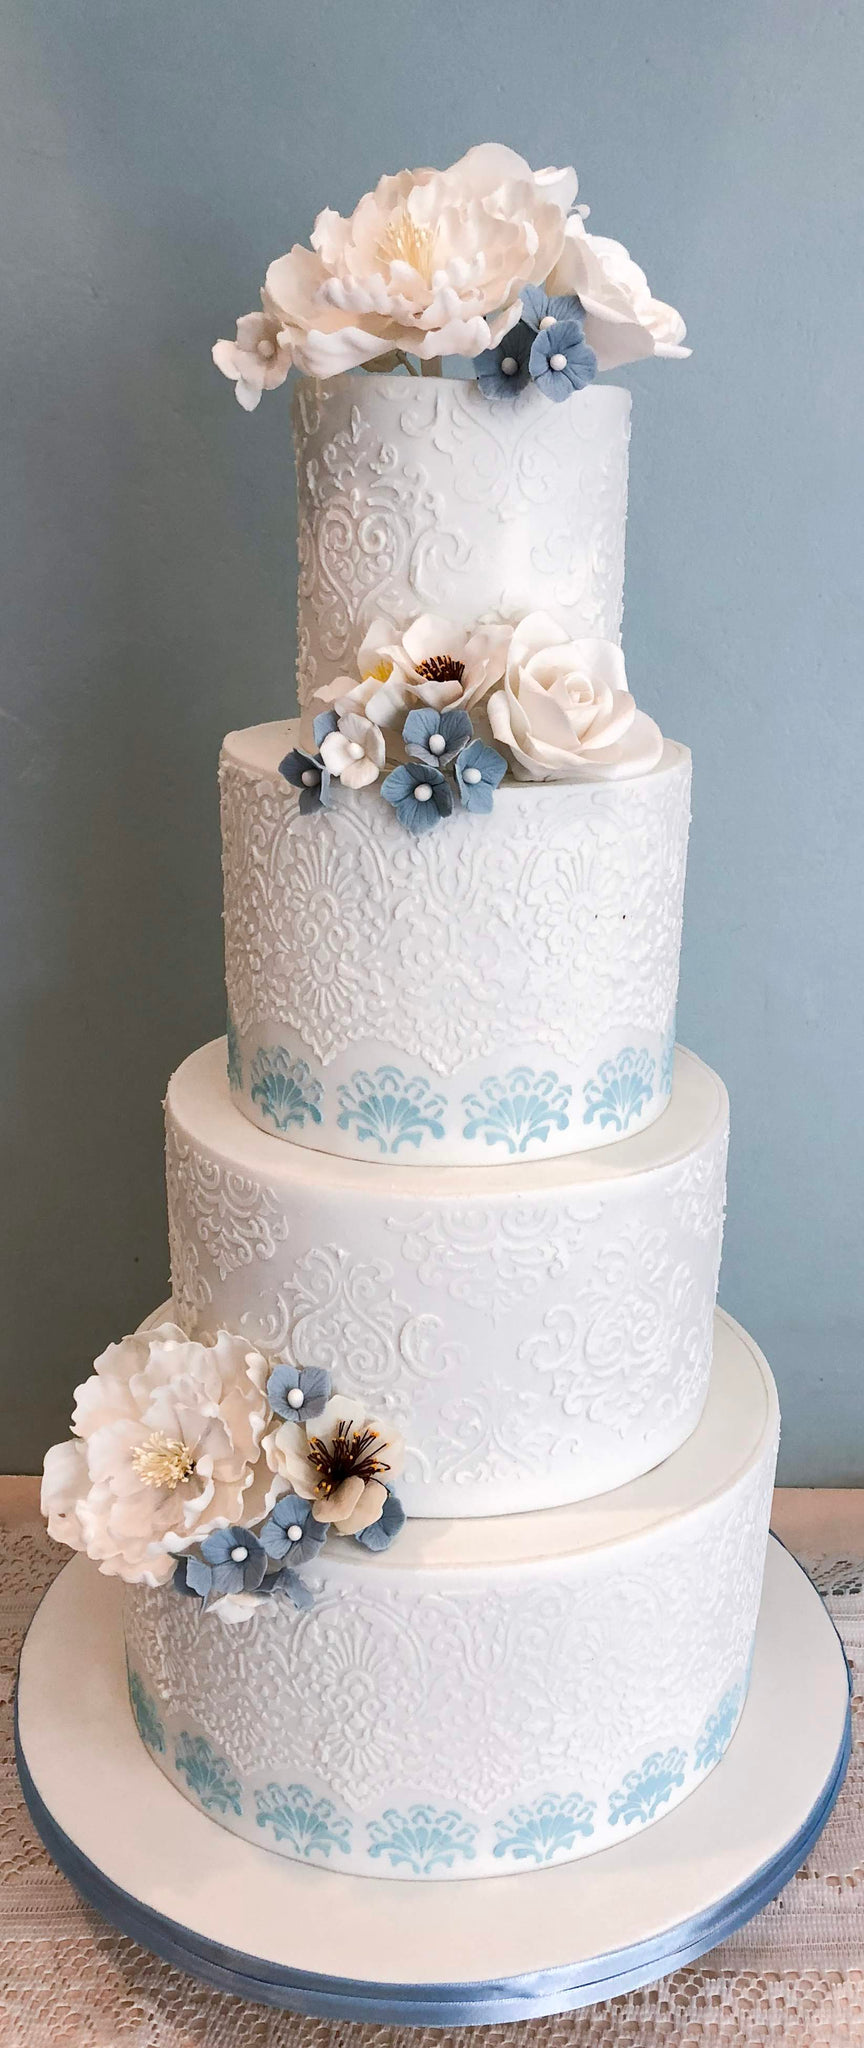 White 4-Tier Wedding Cake